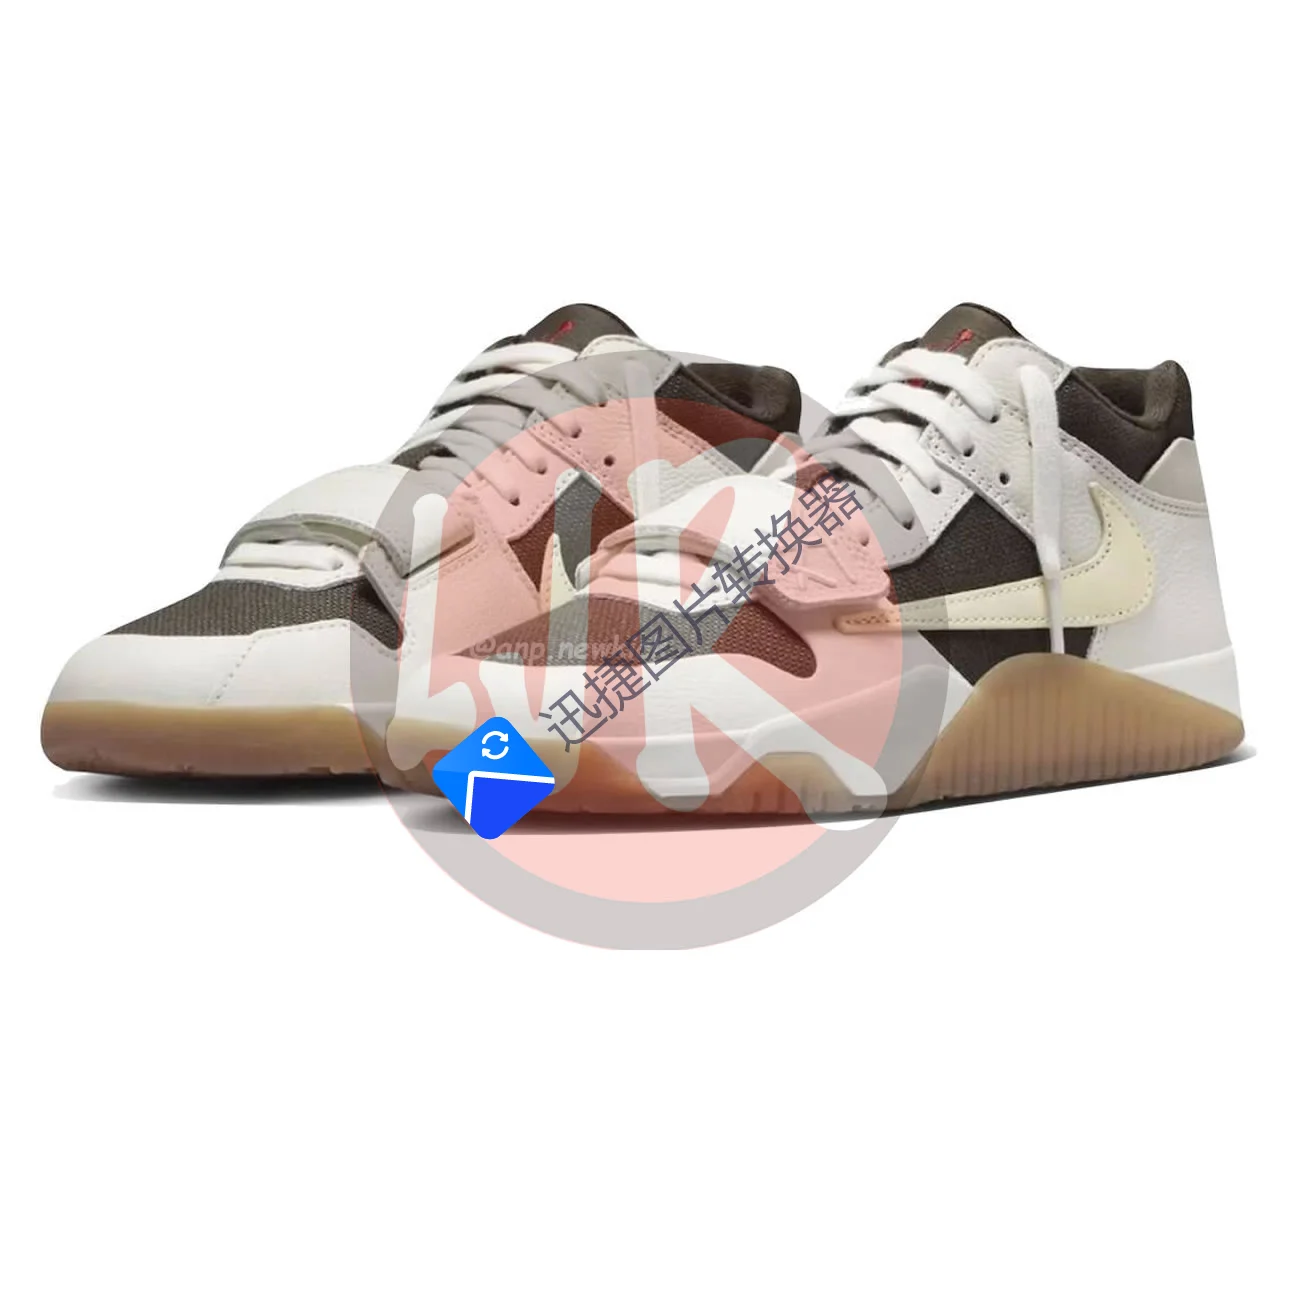 Travis Scott X Jordan Cut The Check Trainer Release Date Ljr Sneakers (22) - bc-ljr.com